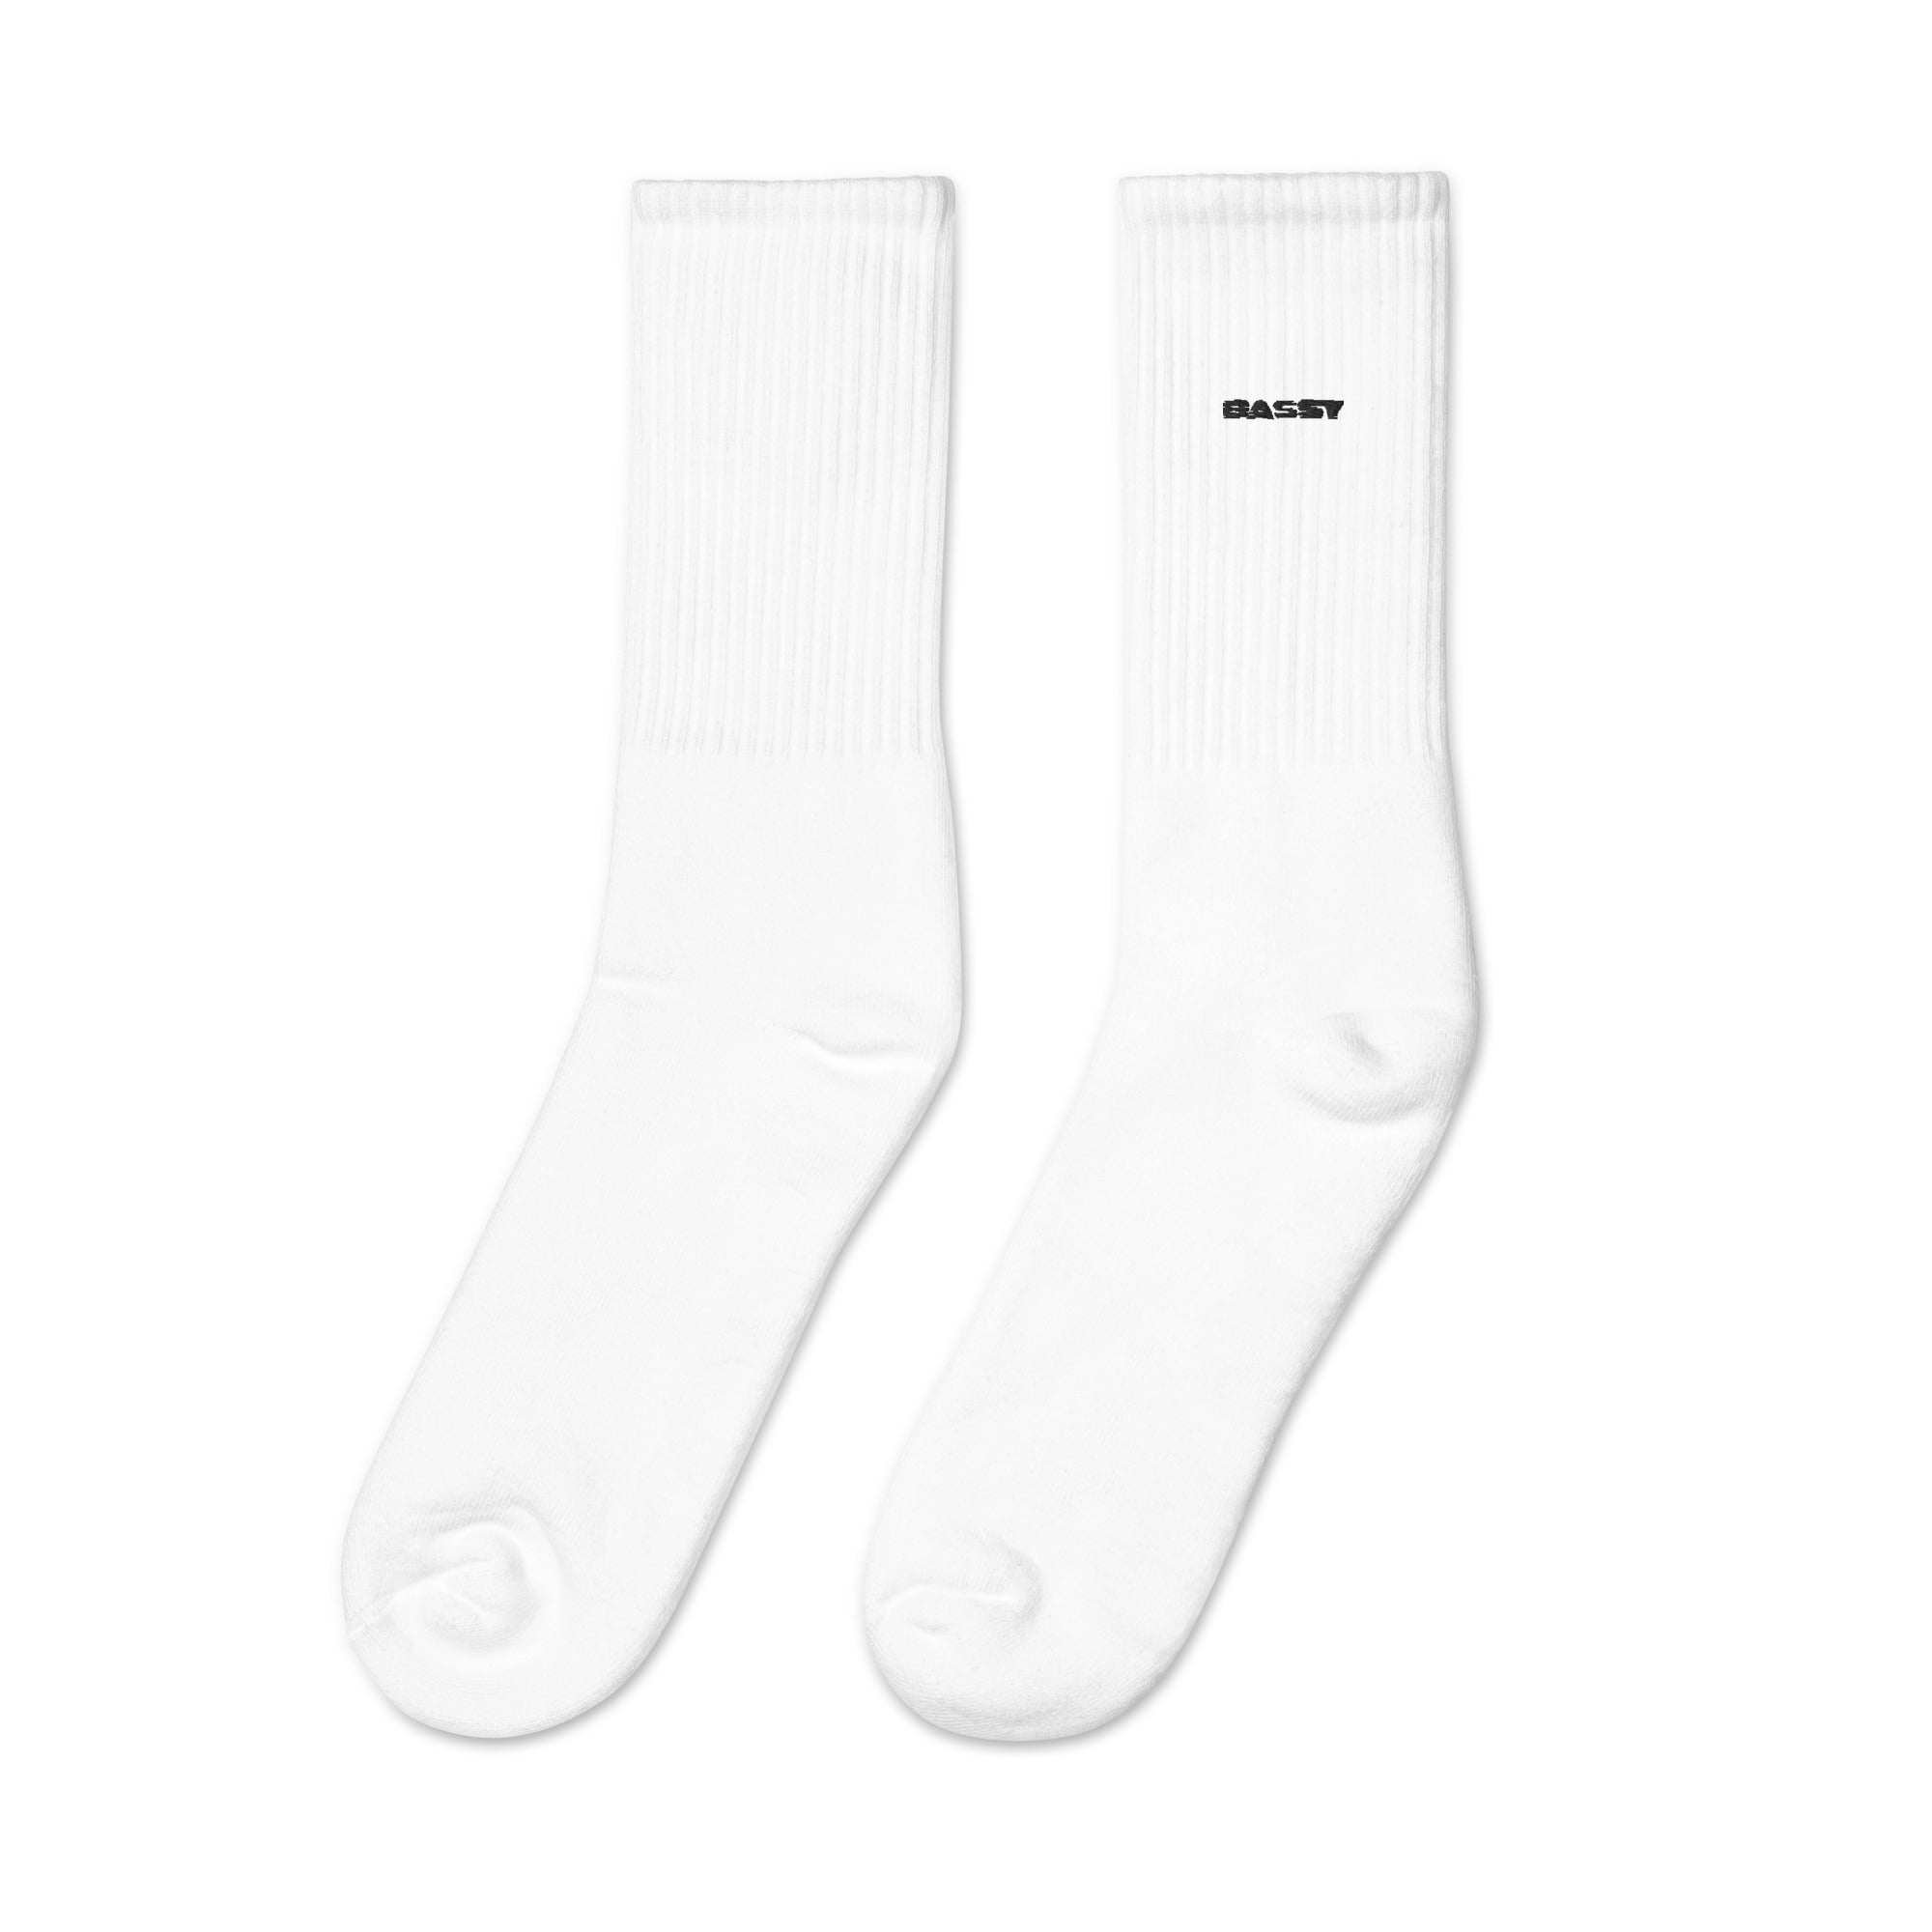 Bassy Socks - White